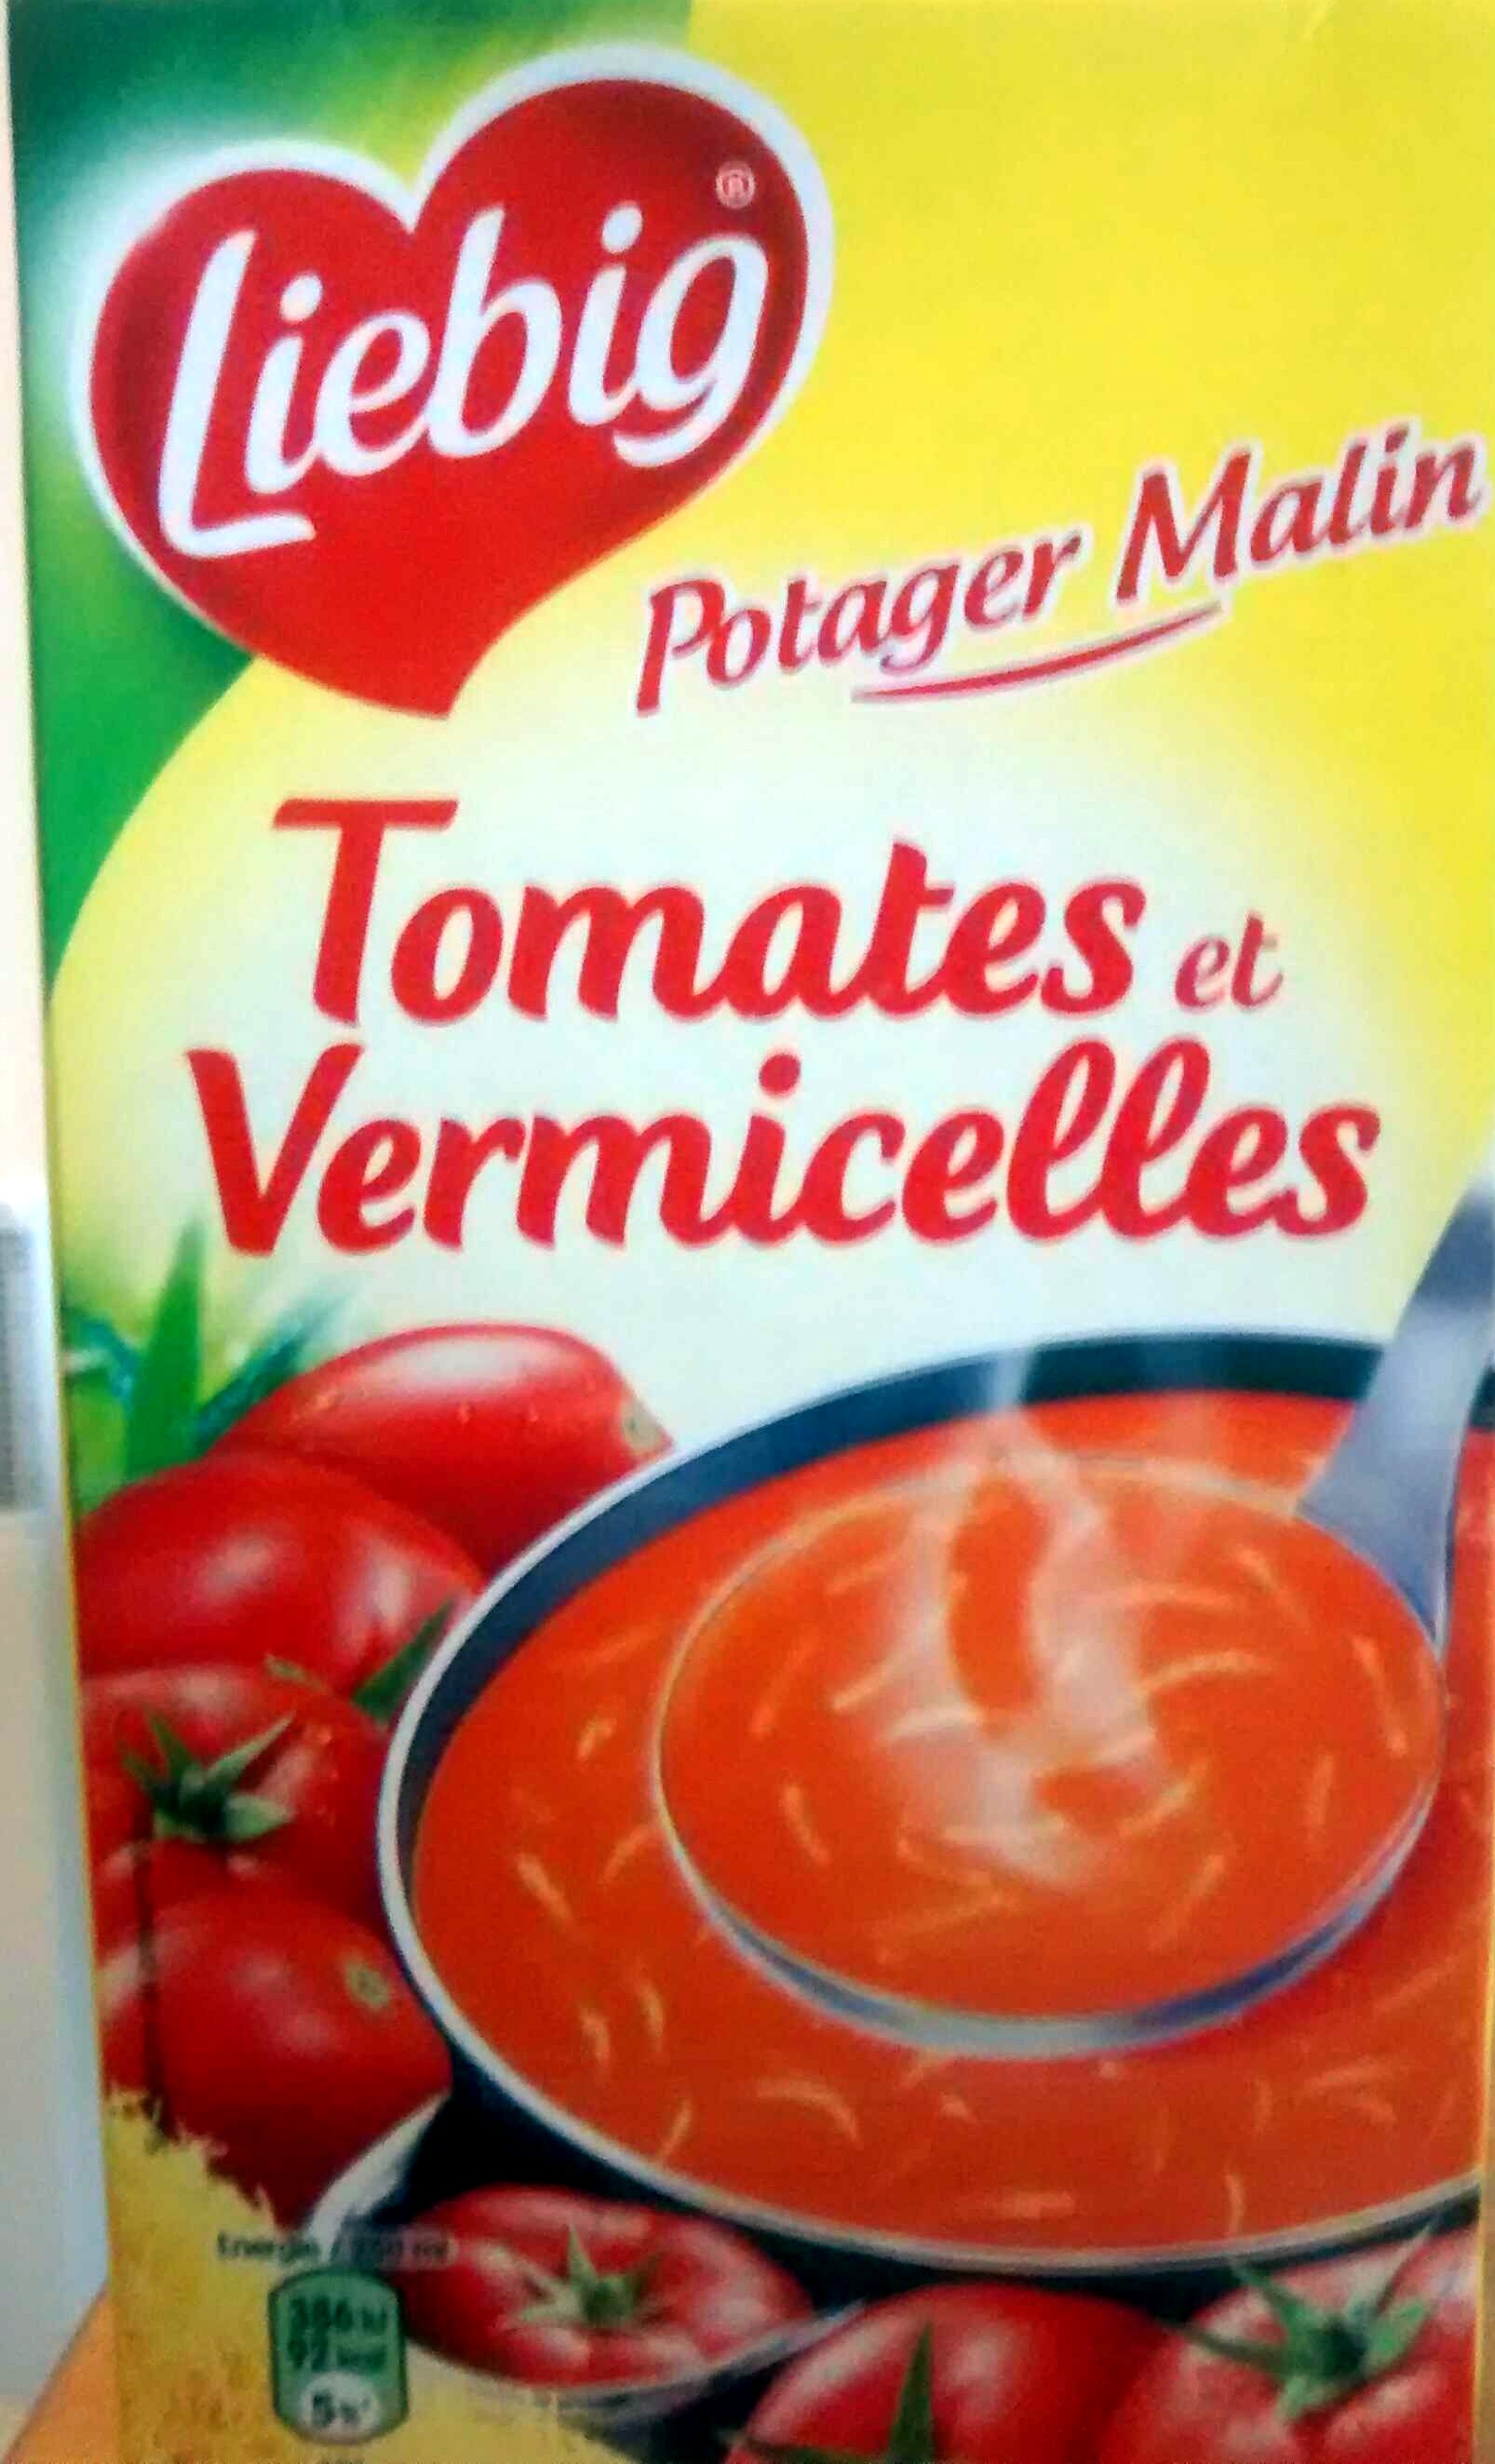 Potager Malin Tomates et Vermicelles - Product - fr